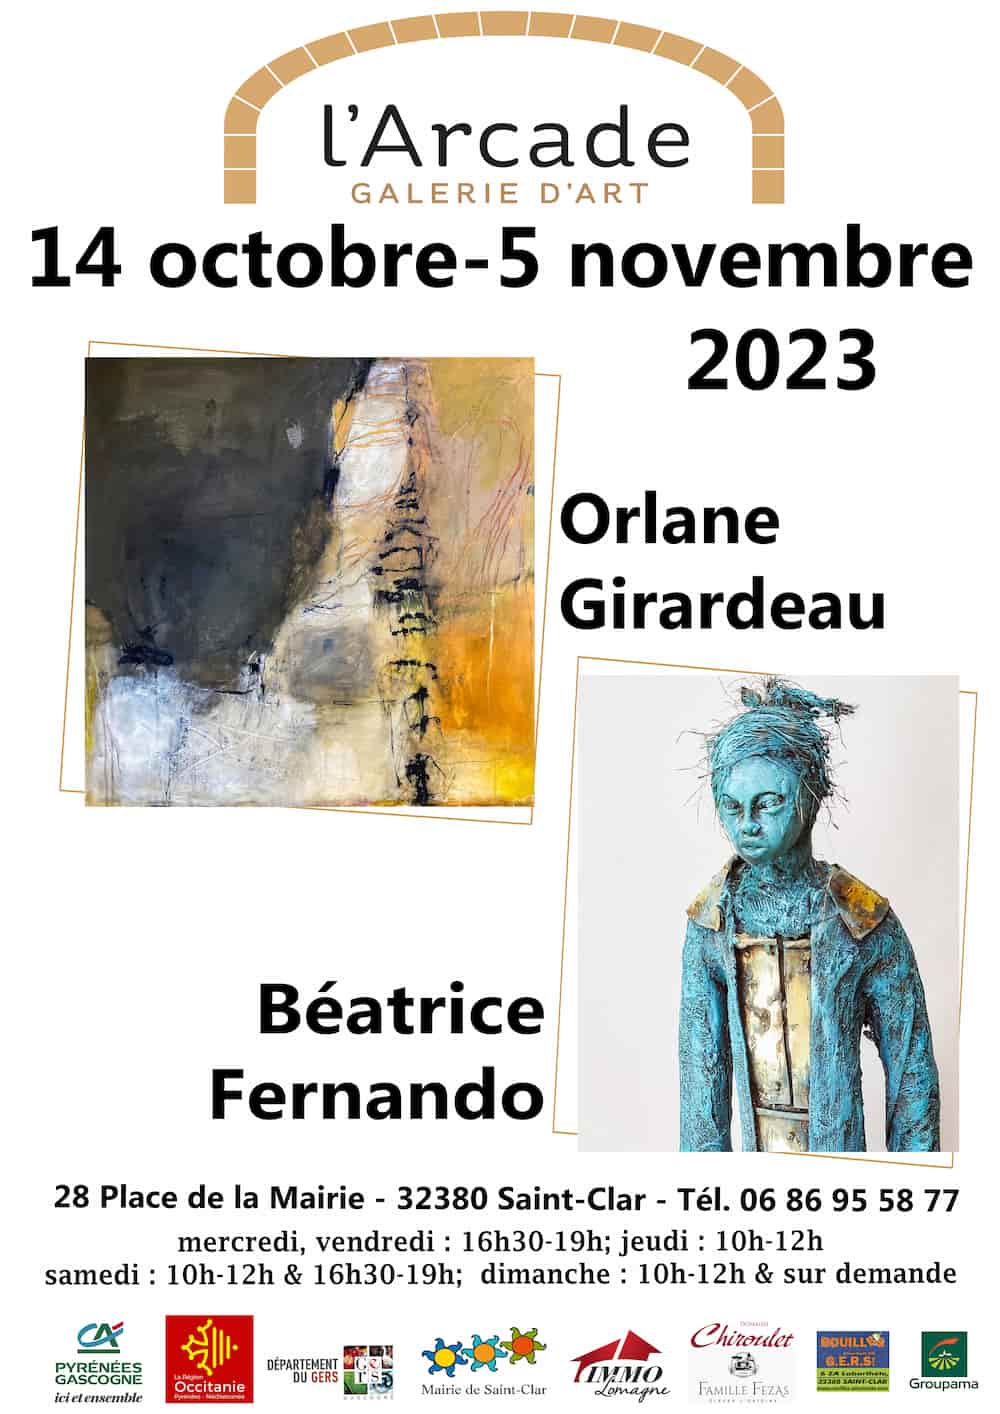 Orlane Girardeau – Béatrice Fernando